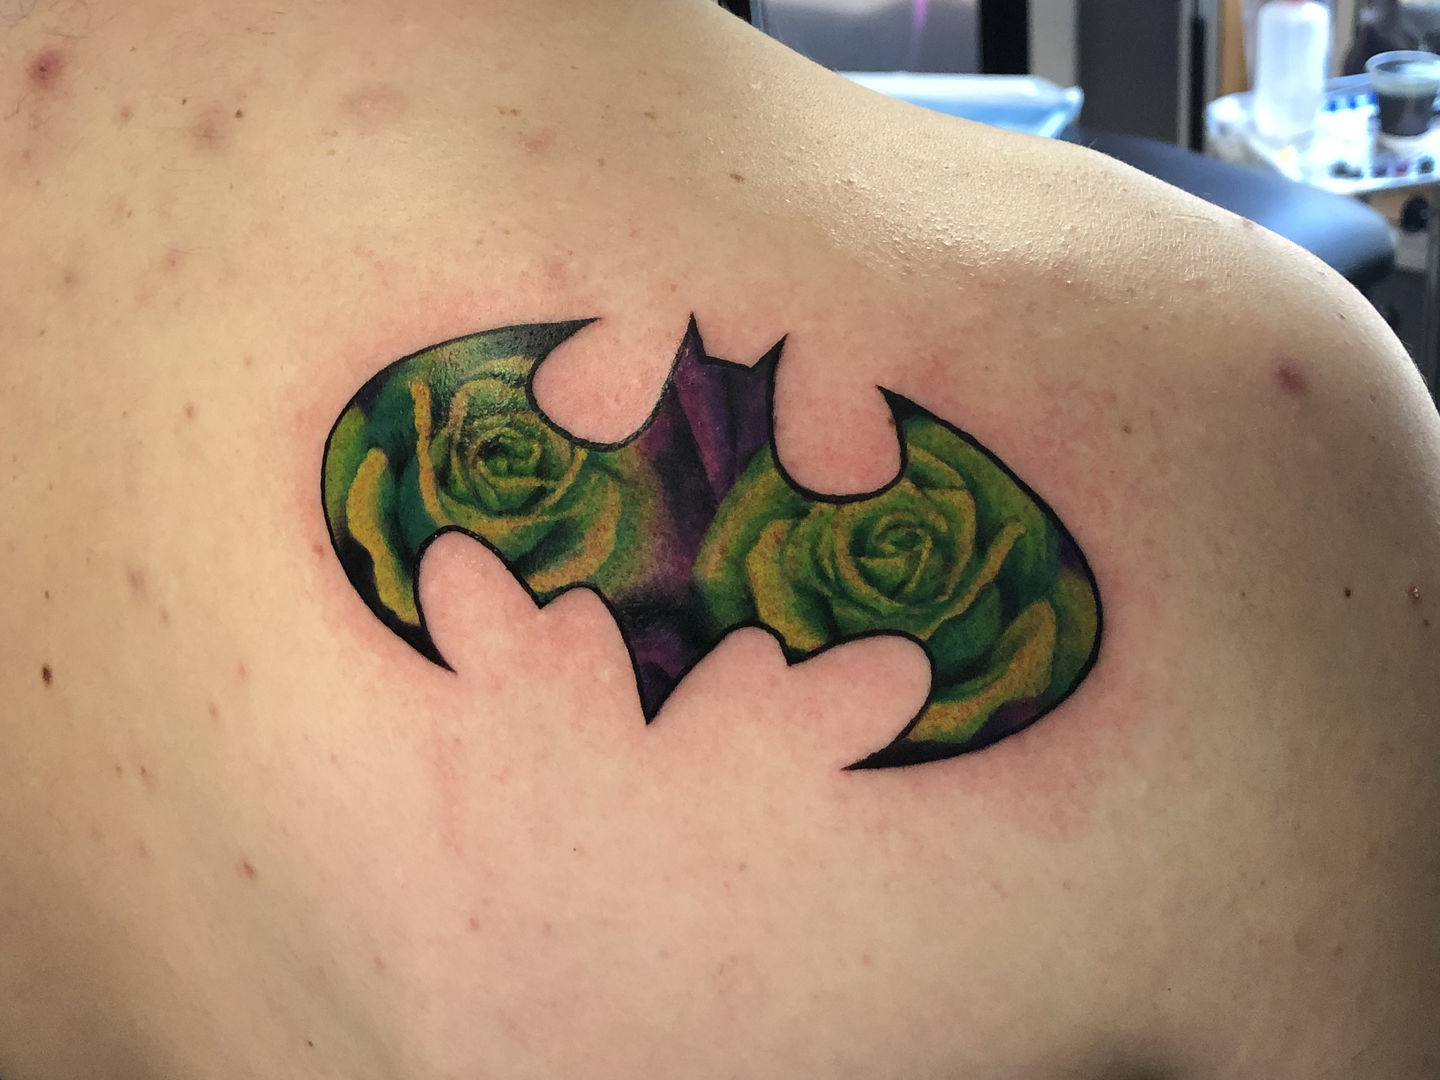 Just wanted to share my batman tattoo! : r/batman